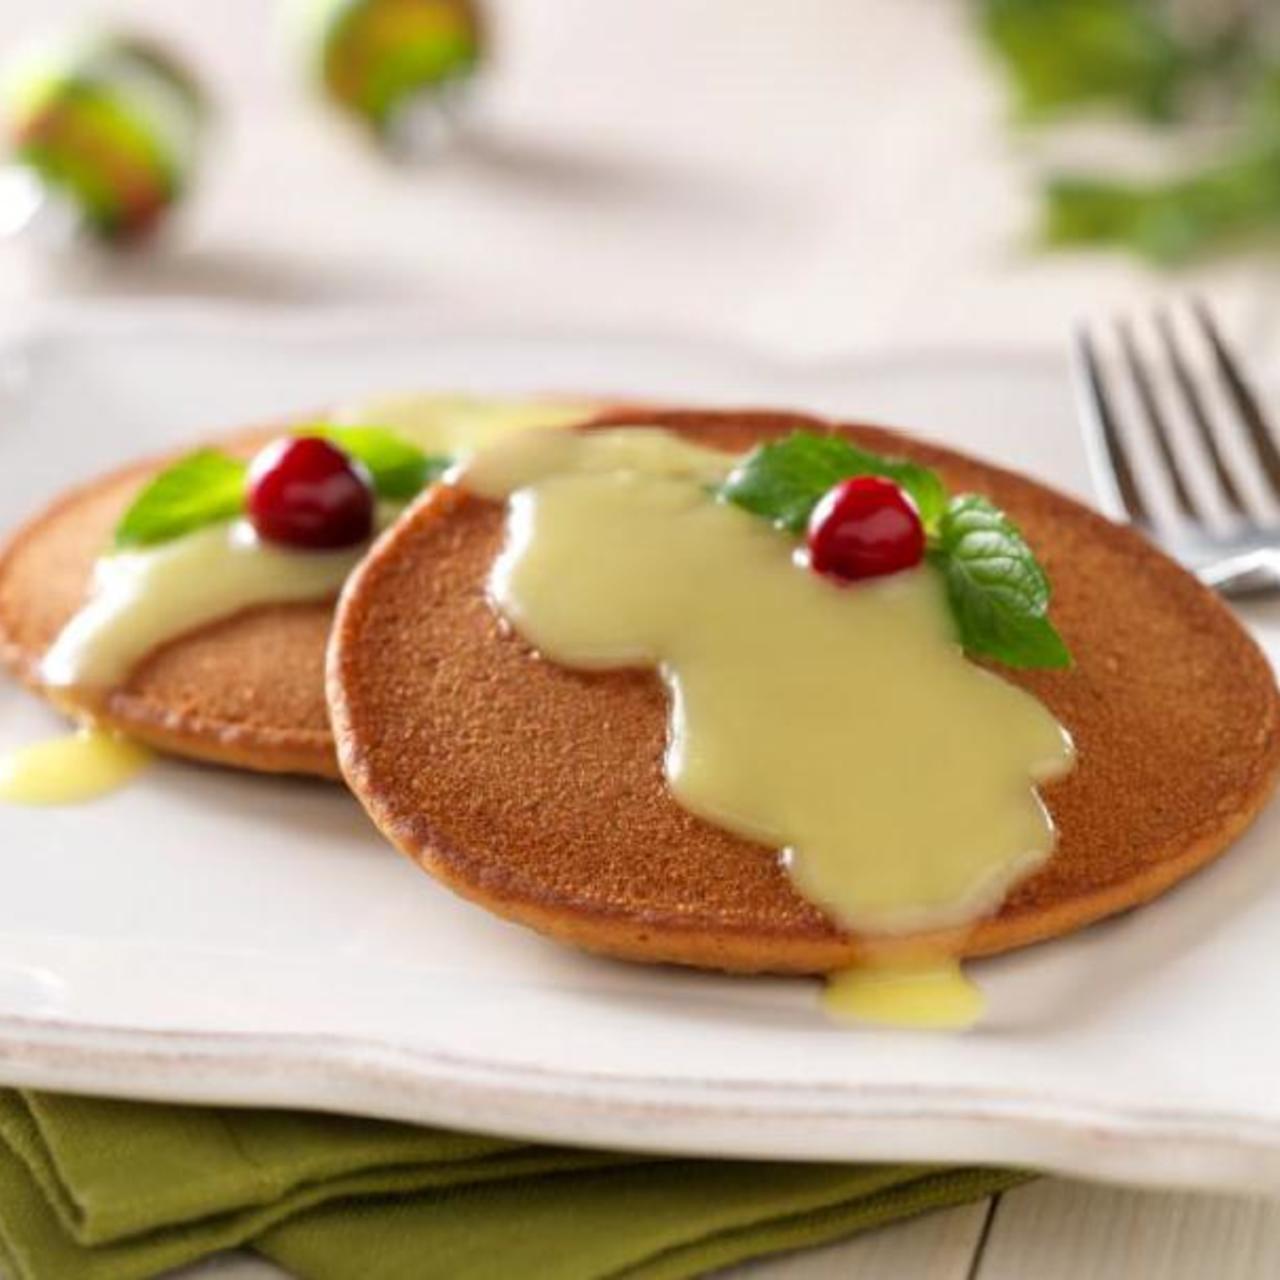 Gingerbread Pancakes with Warm Lemon Sauce